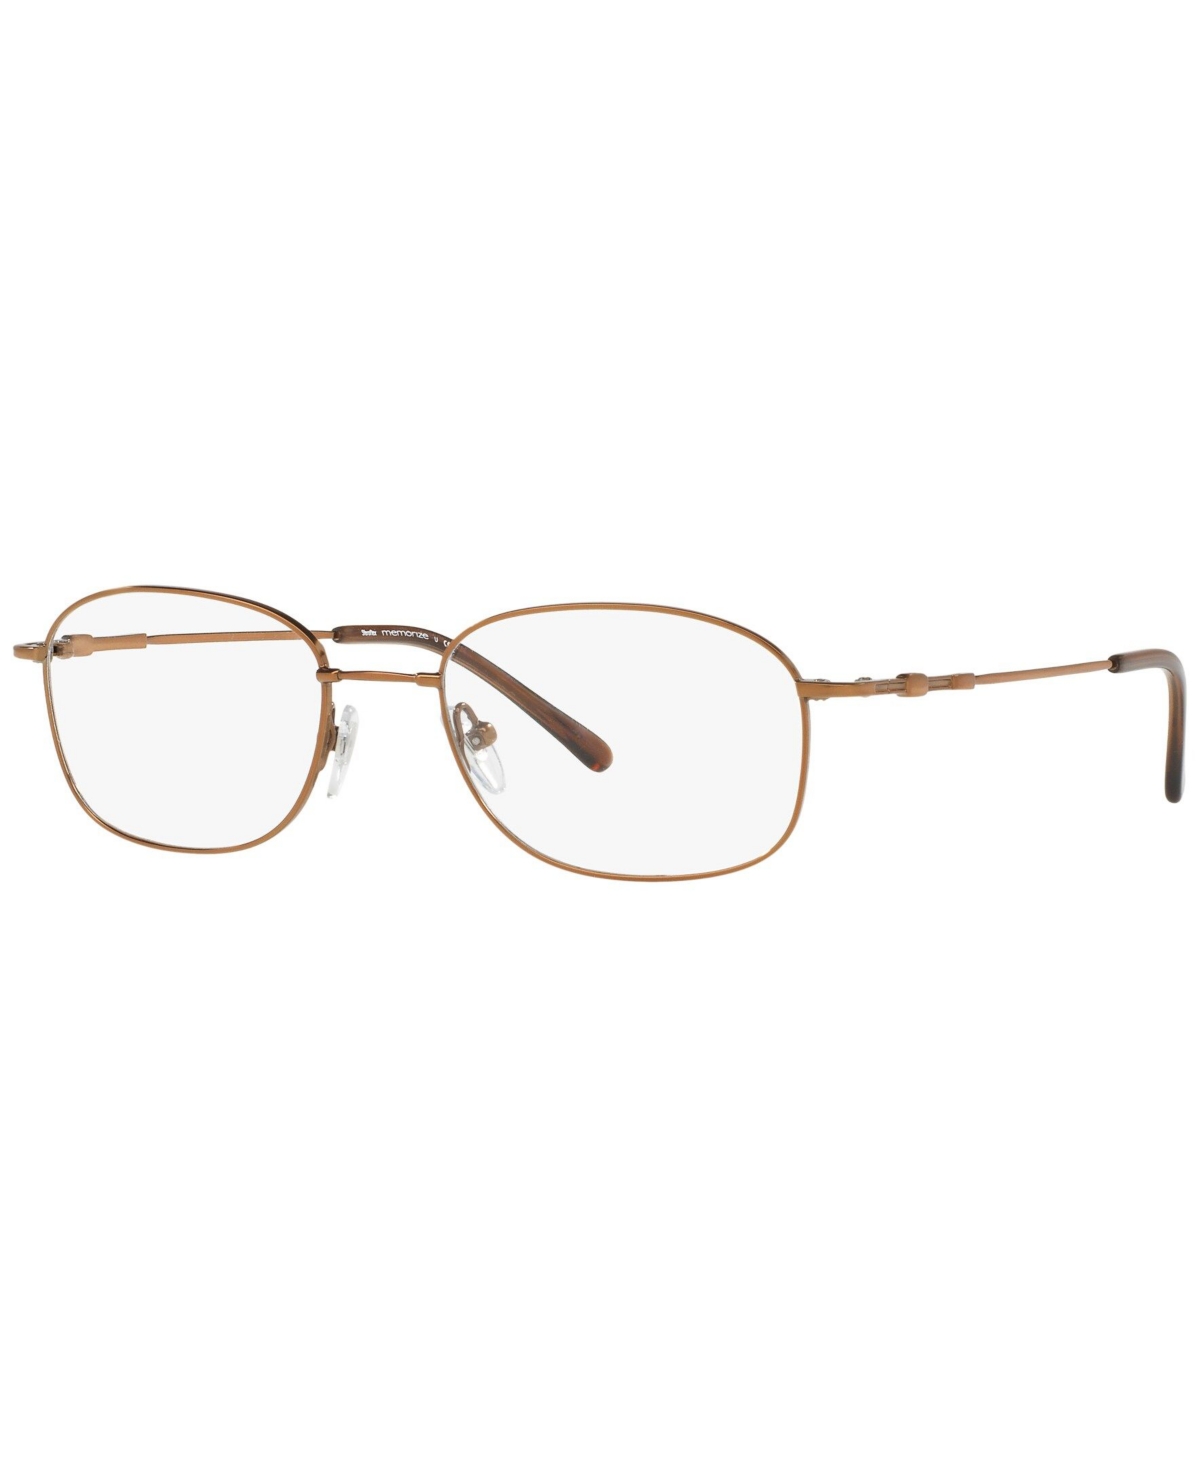 SF9002 Men's Oval Eyeglasses - Shiny Gunmetal